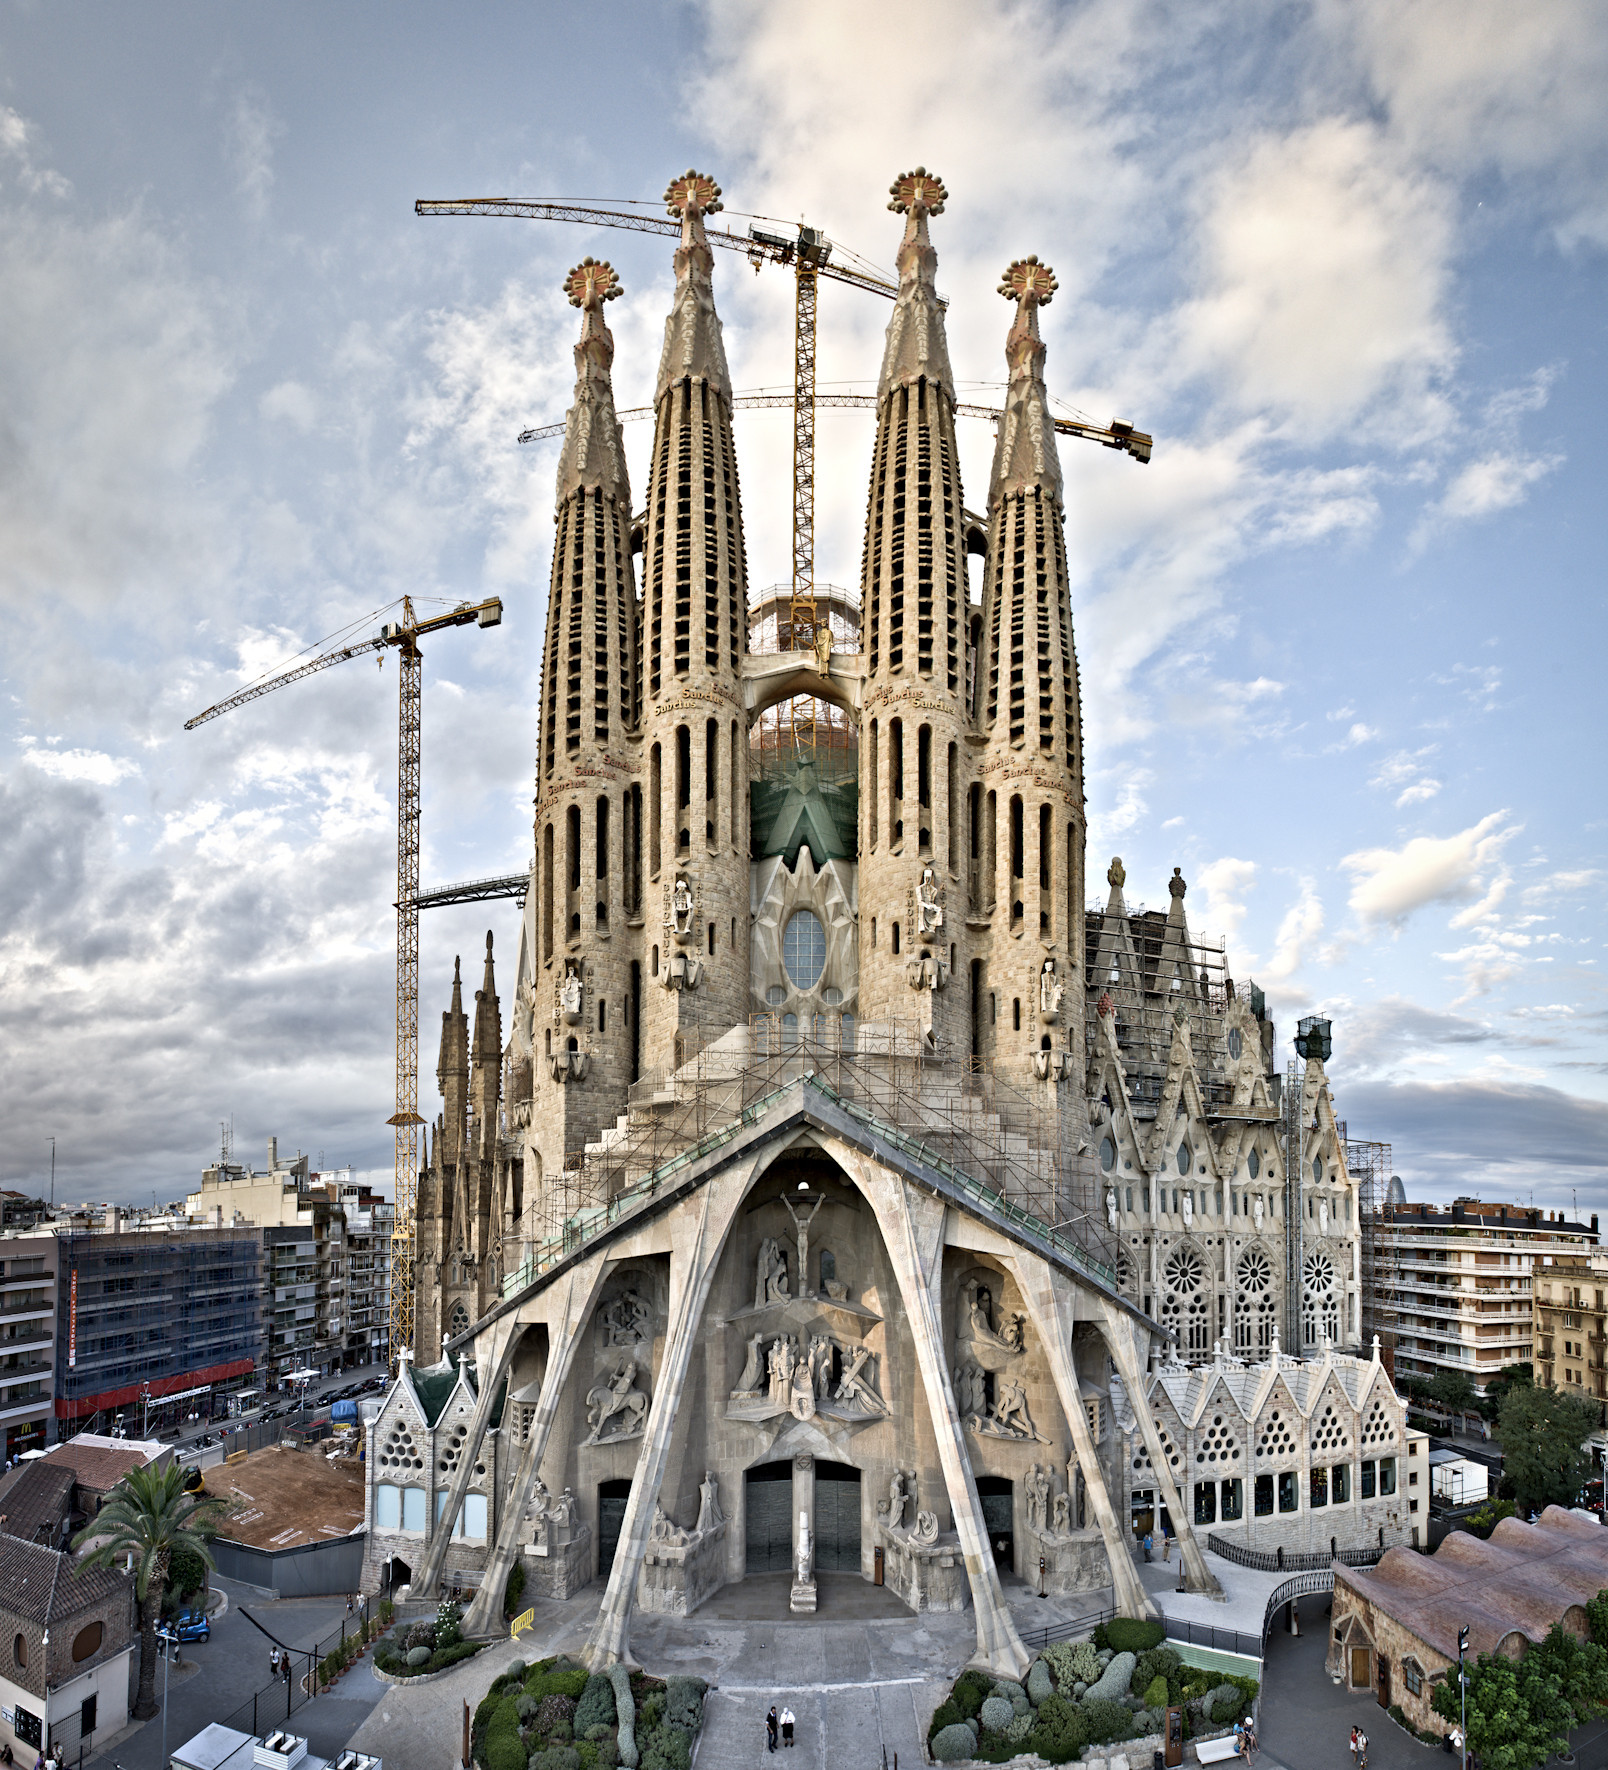 "Gaudi's Masterpieces